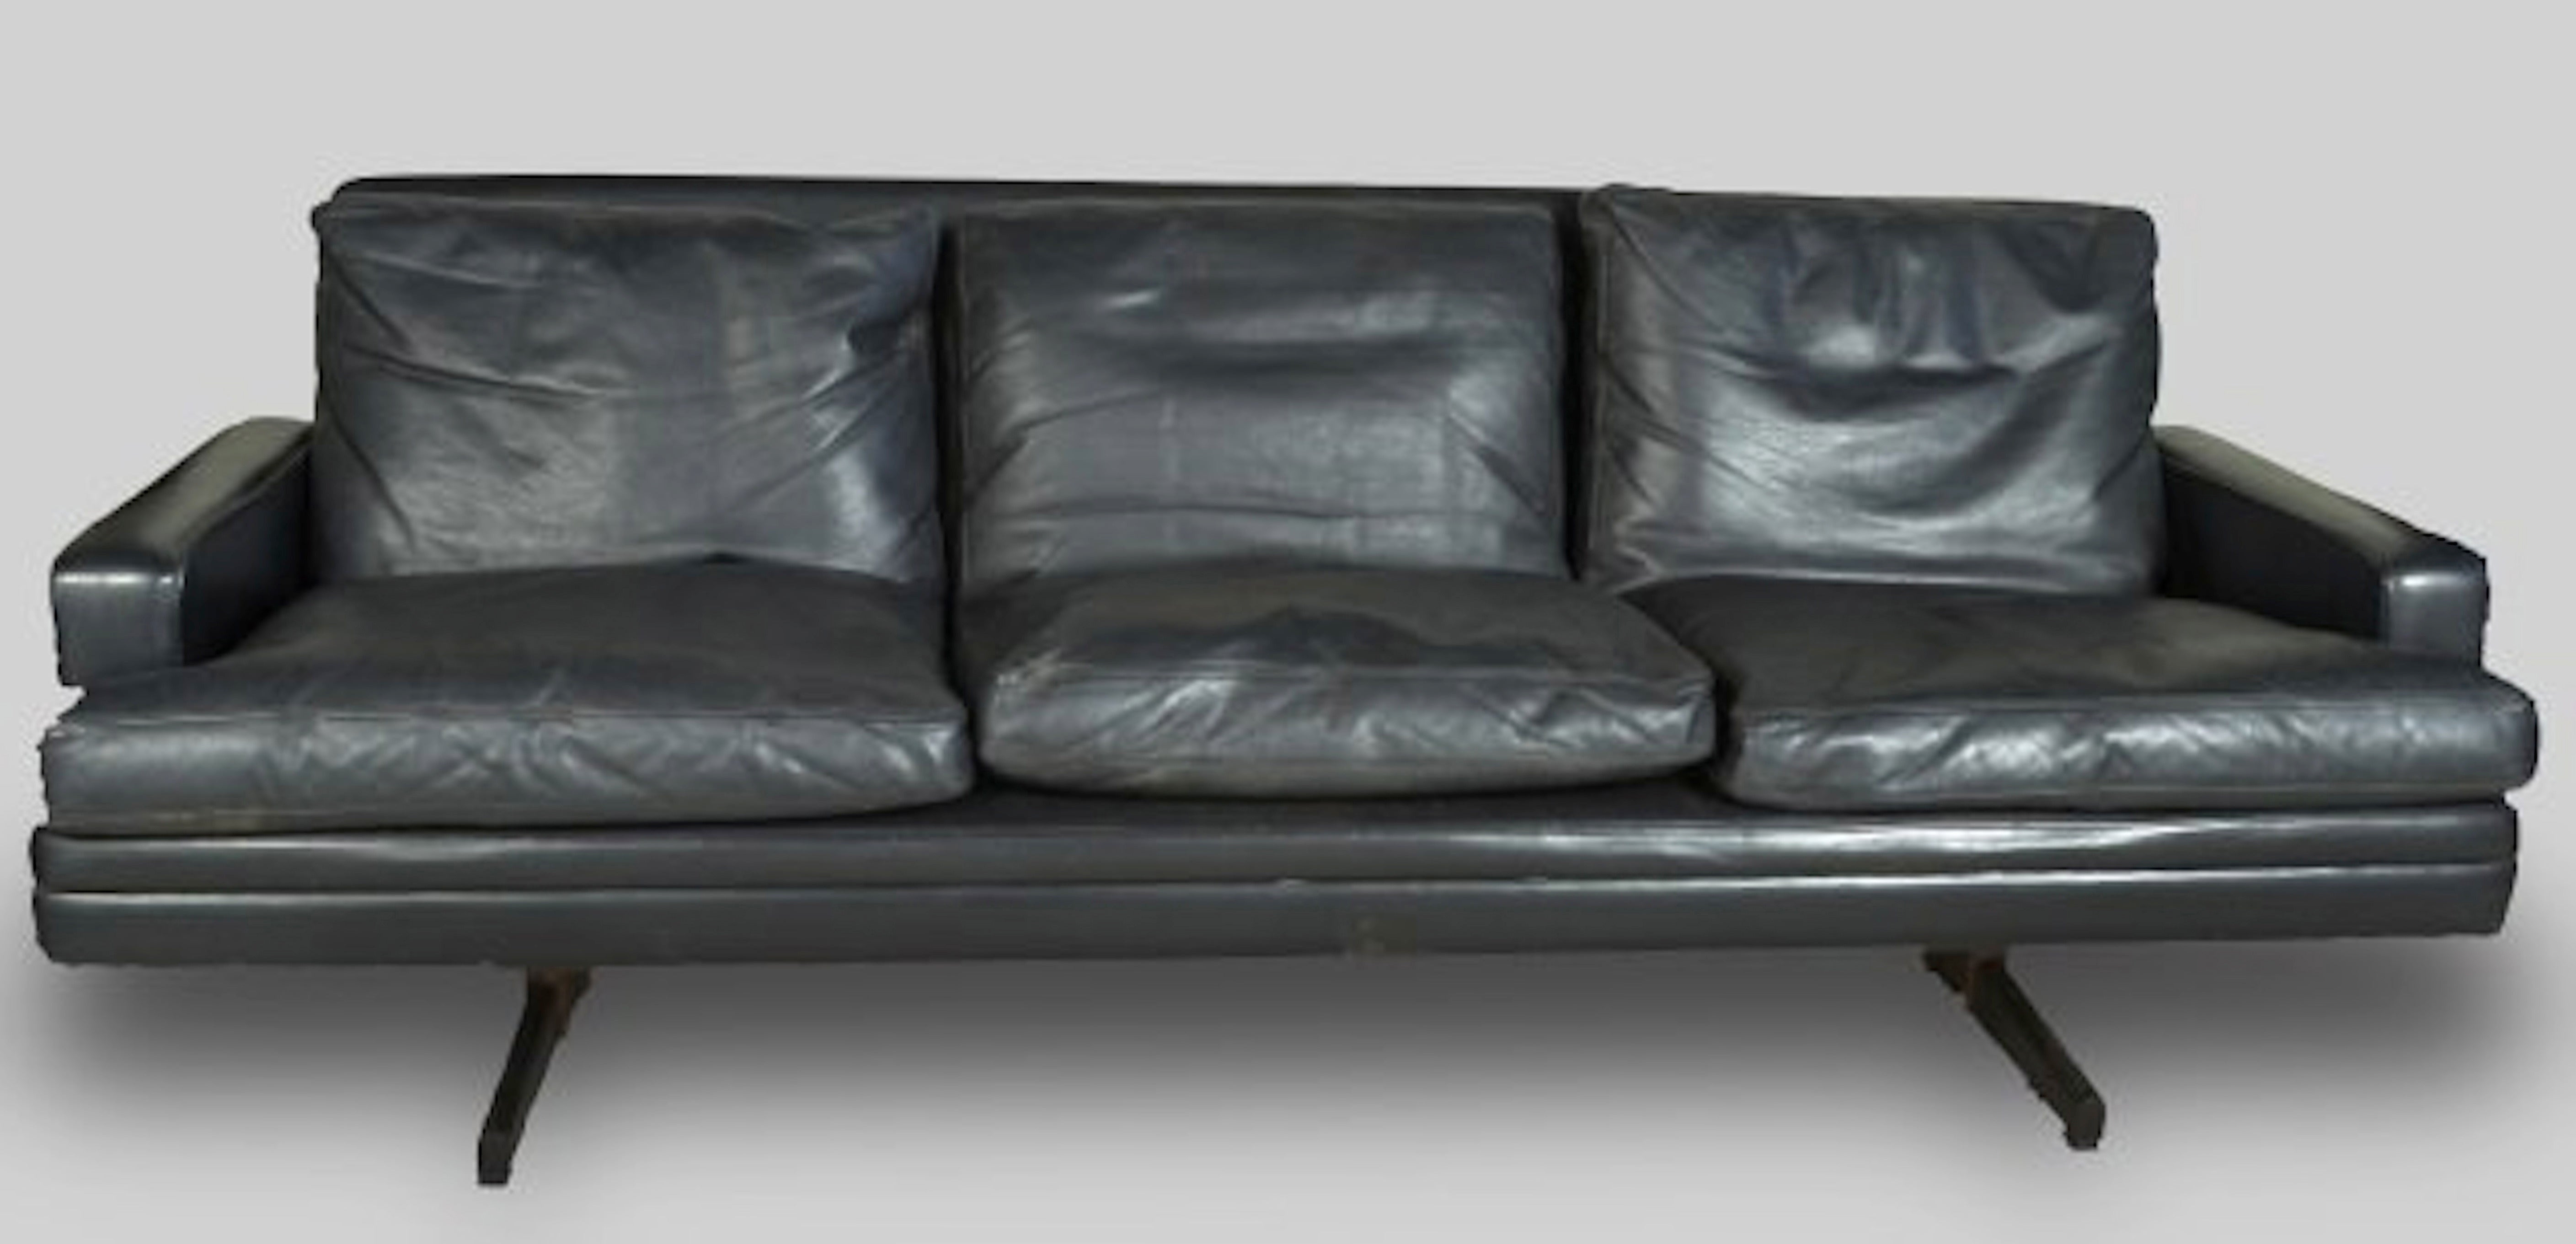 1960s Sleek 3 Cushion Black Leather Sofa by Fredrik Kayser for Vatne Mobler